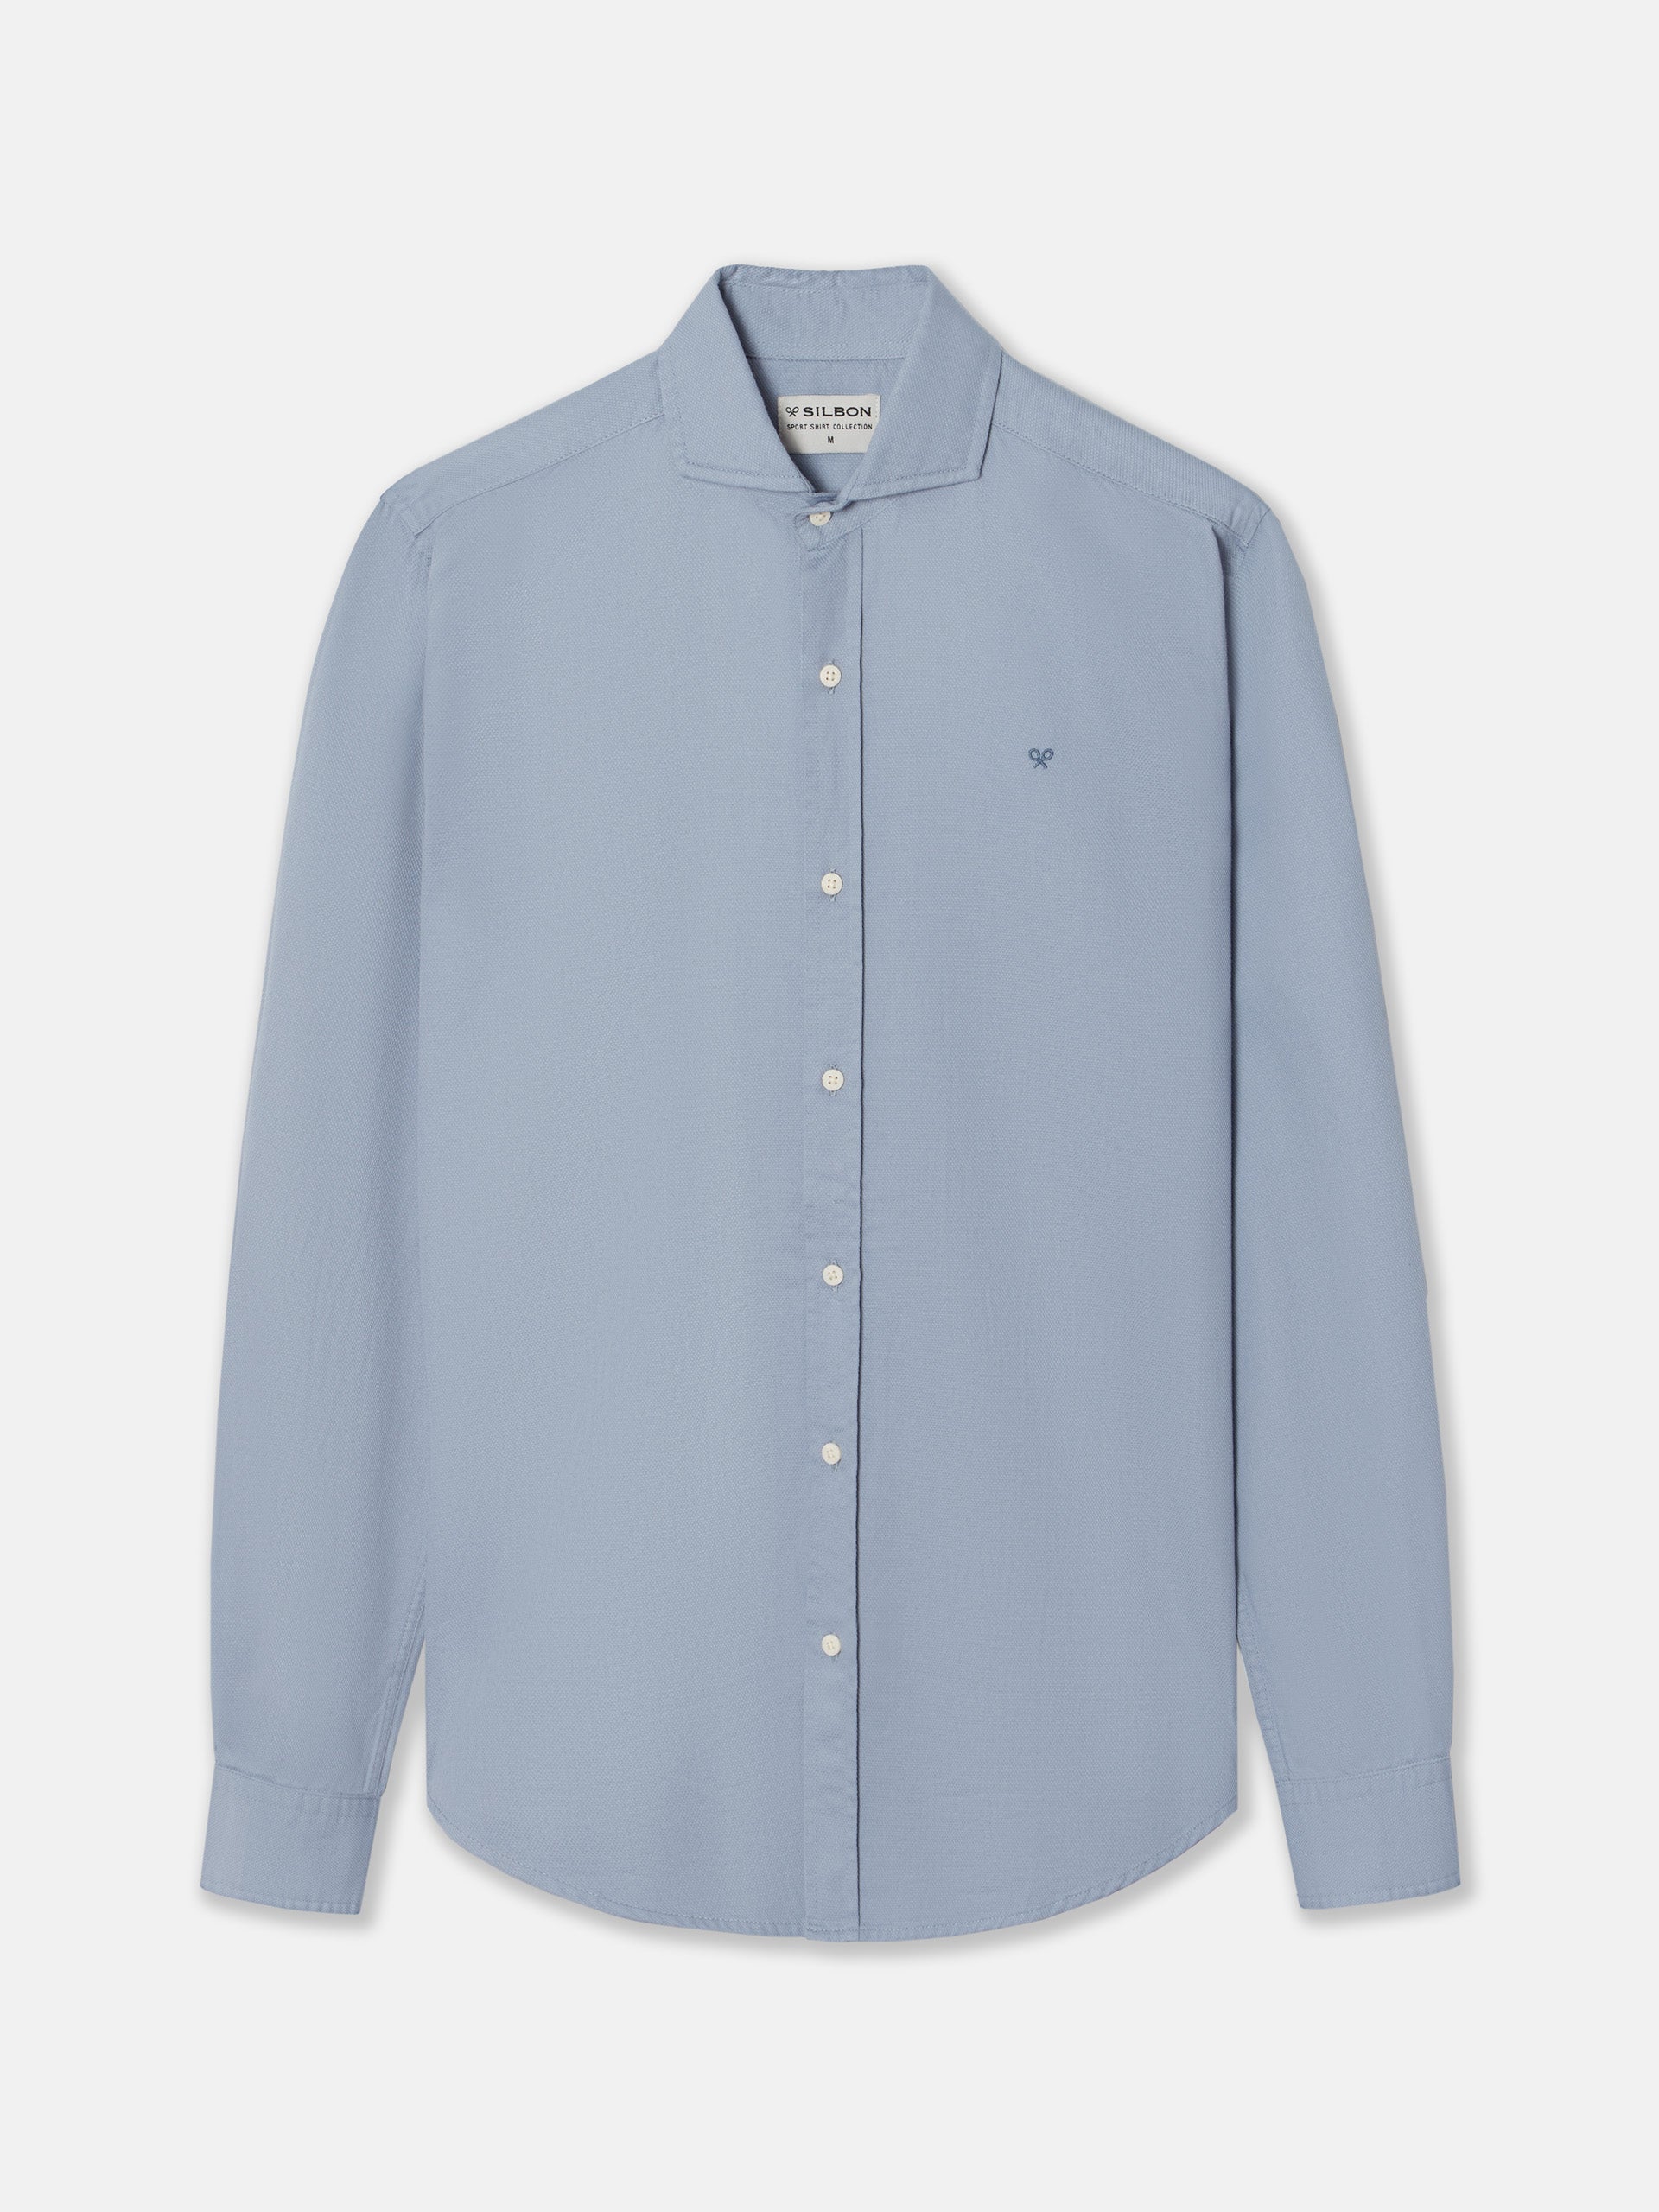 Camisa sport silbon structure azul gris